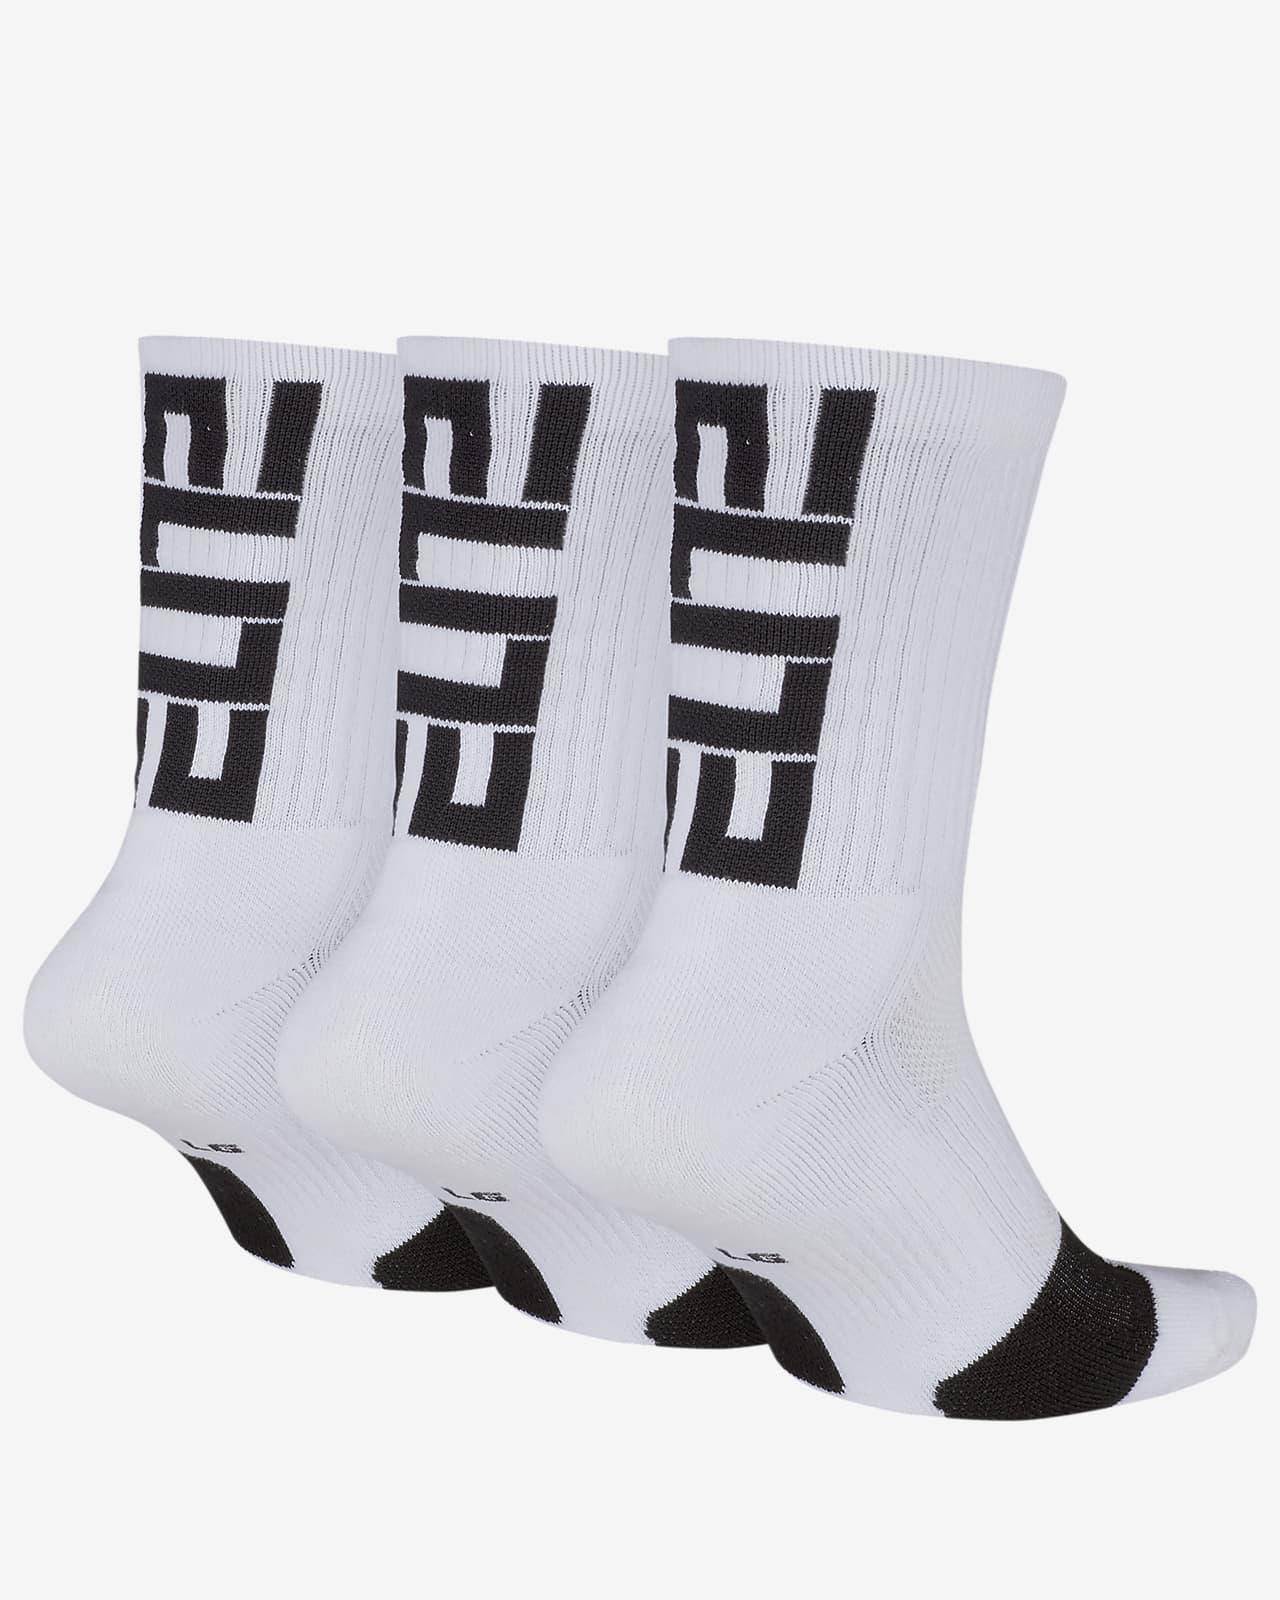 nike elite socks pack